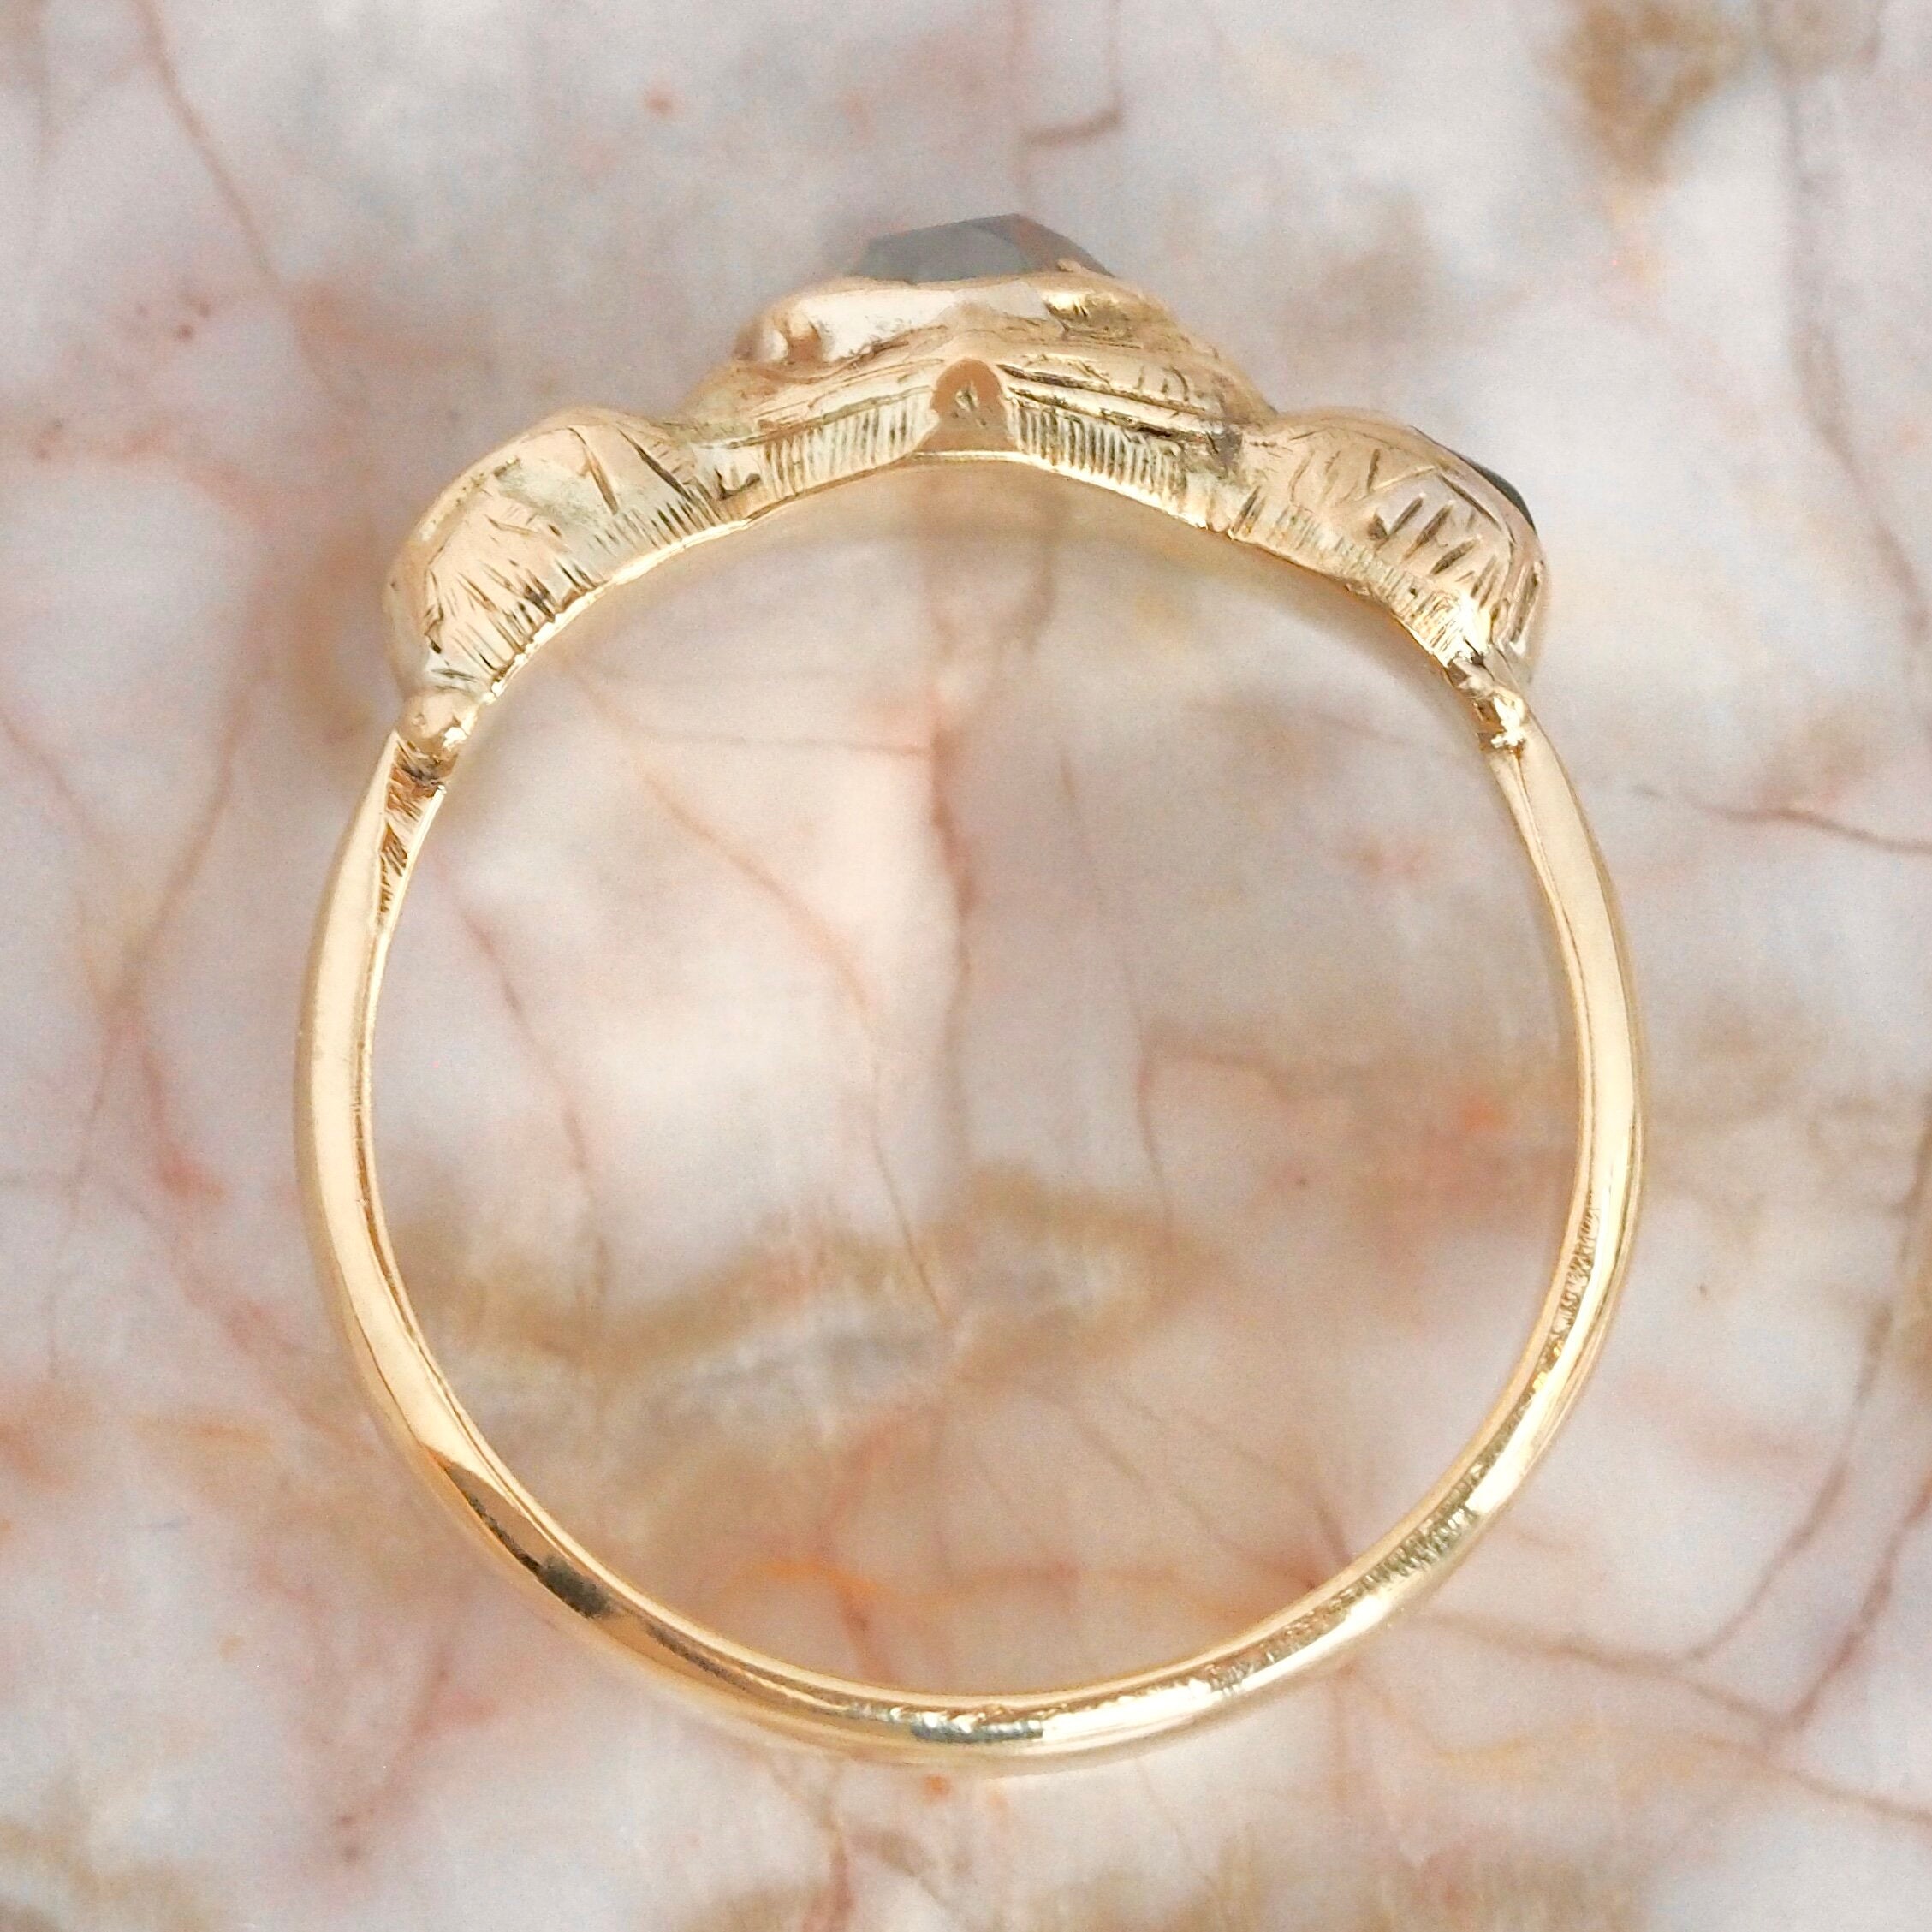 Antique English Georgian 18k Gold Old Mine Cut Diamond and Emerald Trilogy Ring